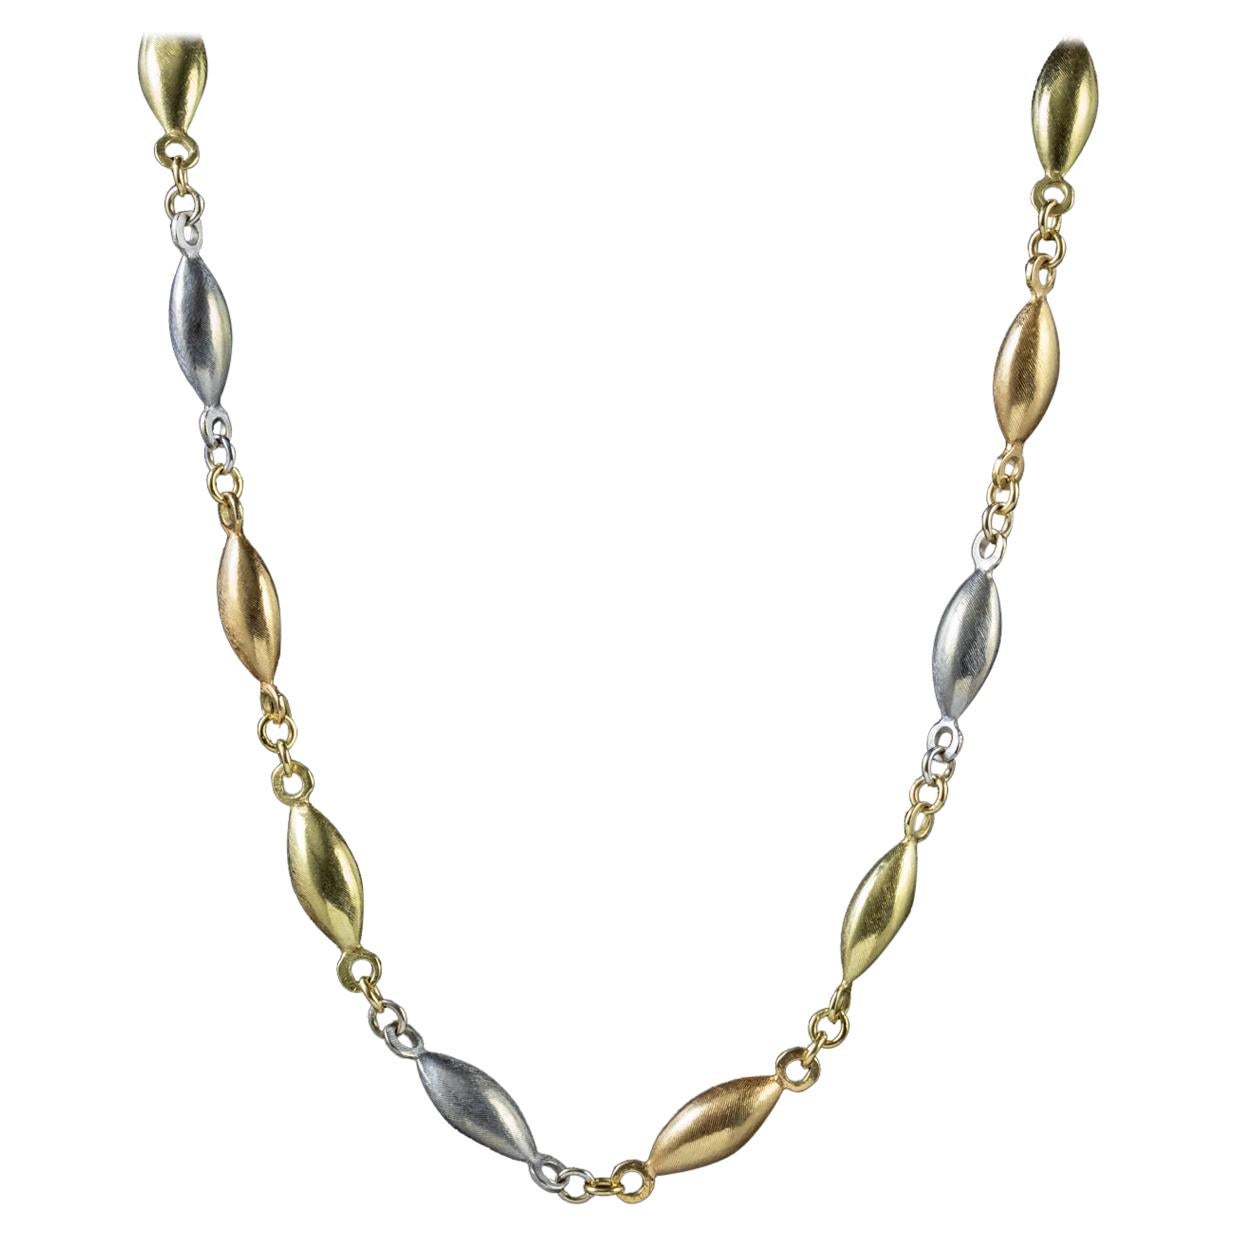 Antique Edwardian Chain Platinum 18 Carat Gold Link Necklace, circa 1910